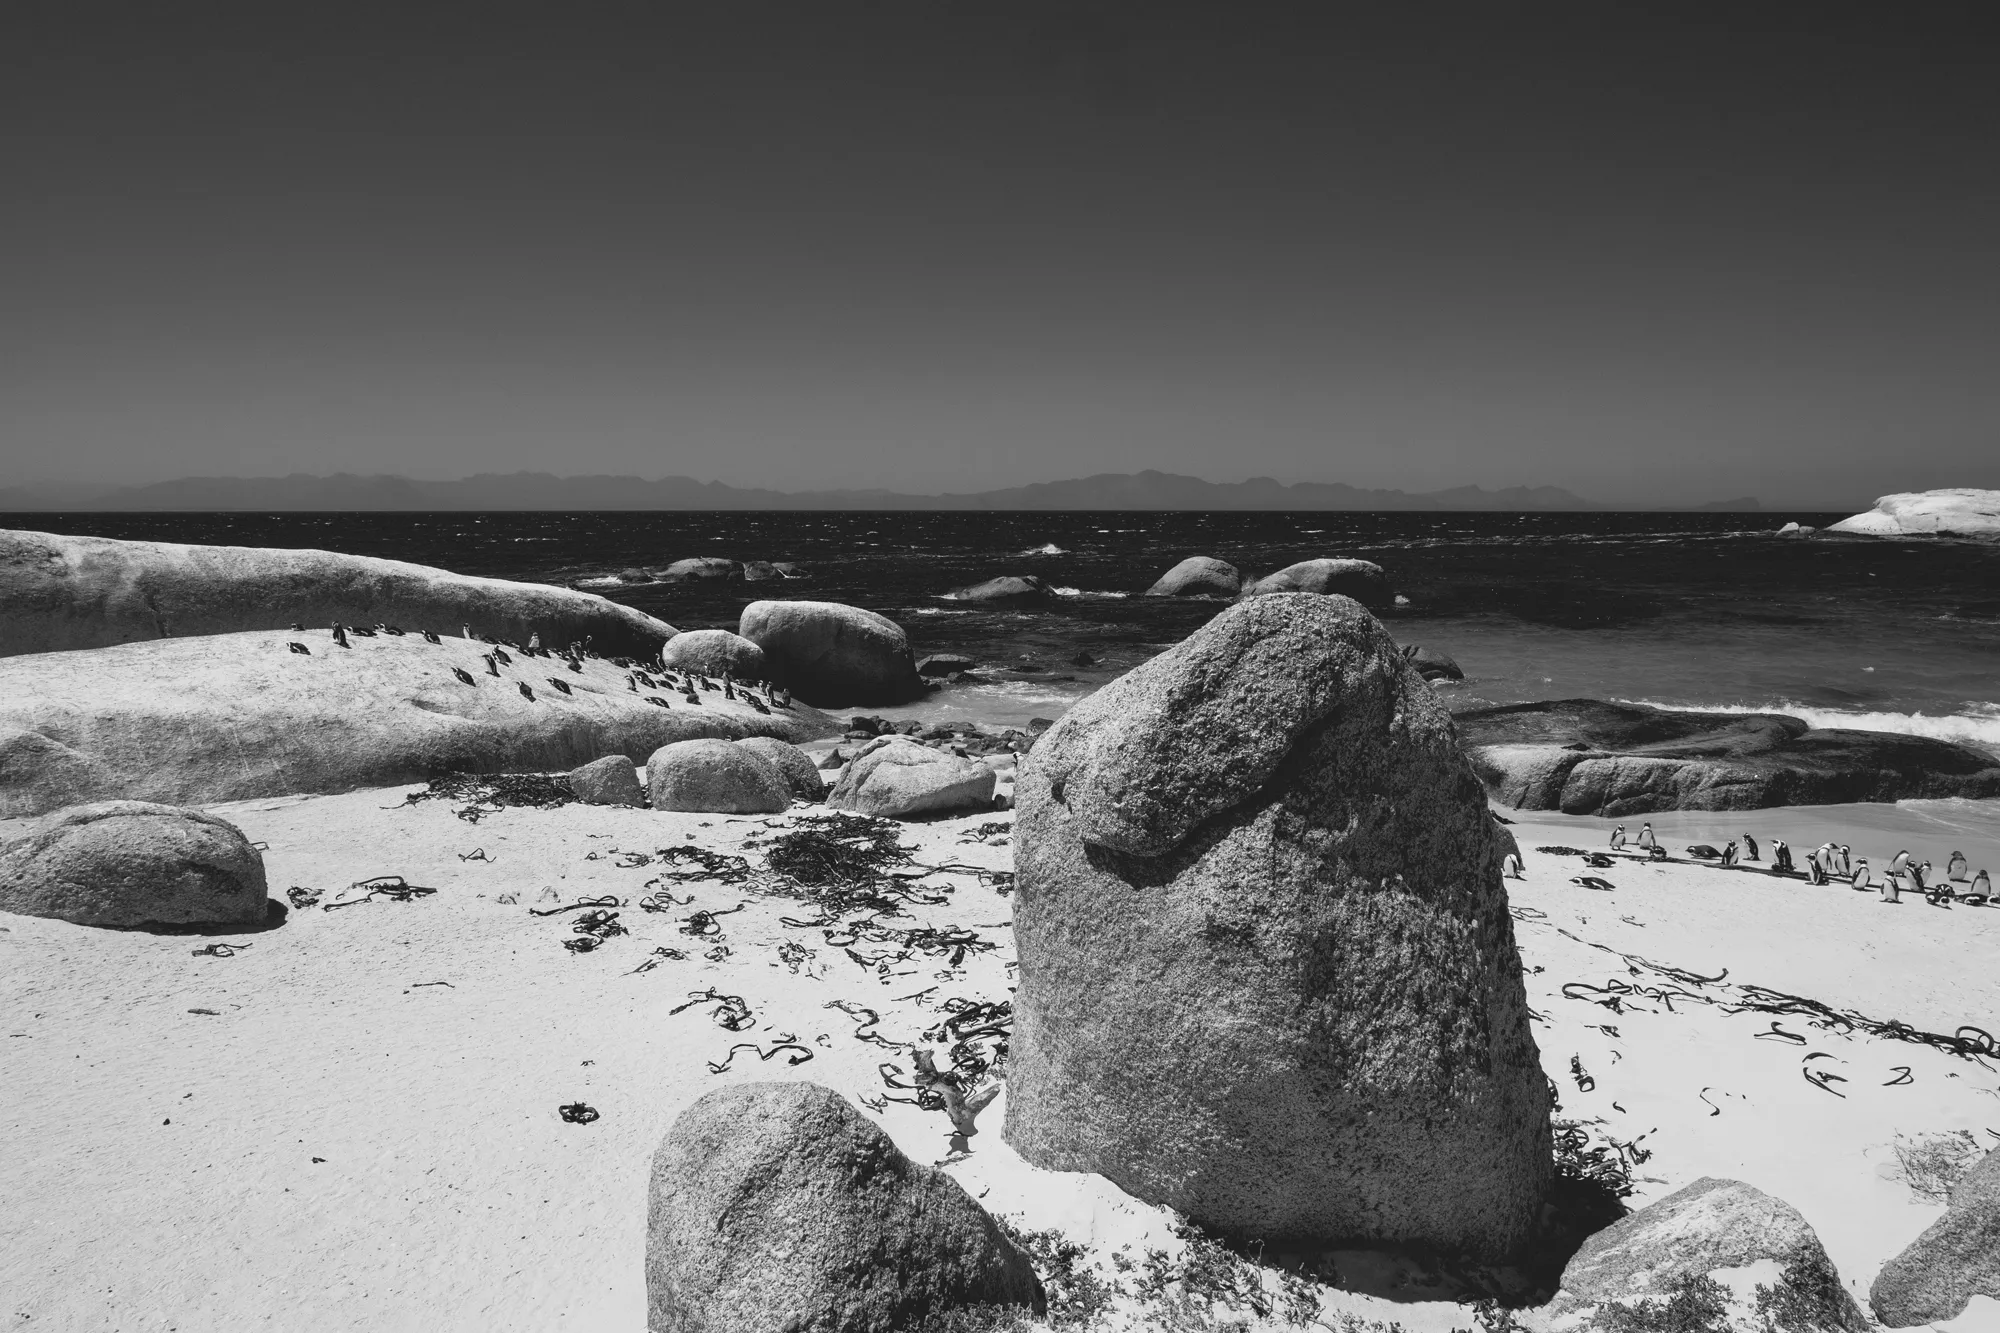 2022-02-14 - Cape Town - Rocks on beach